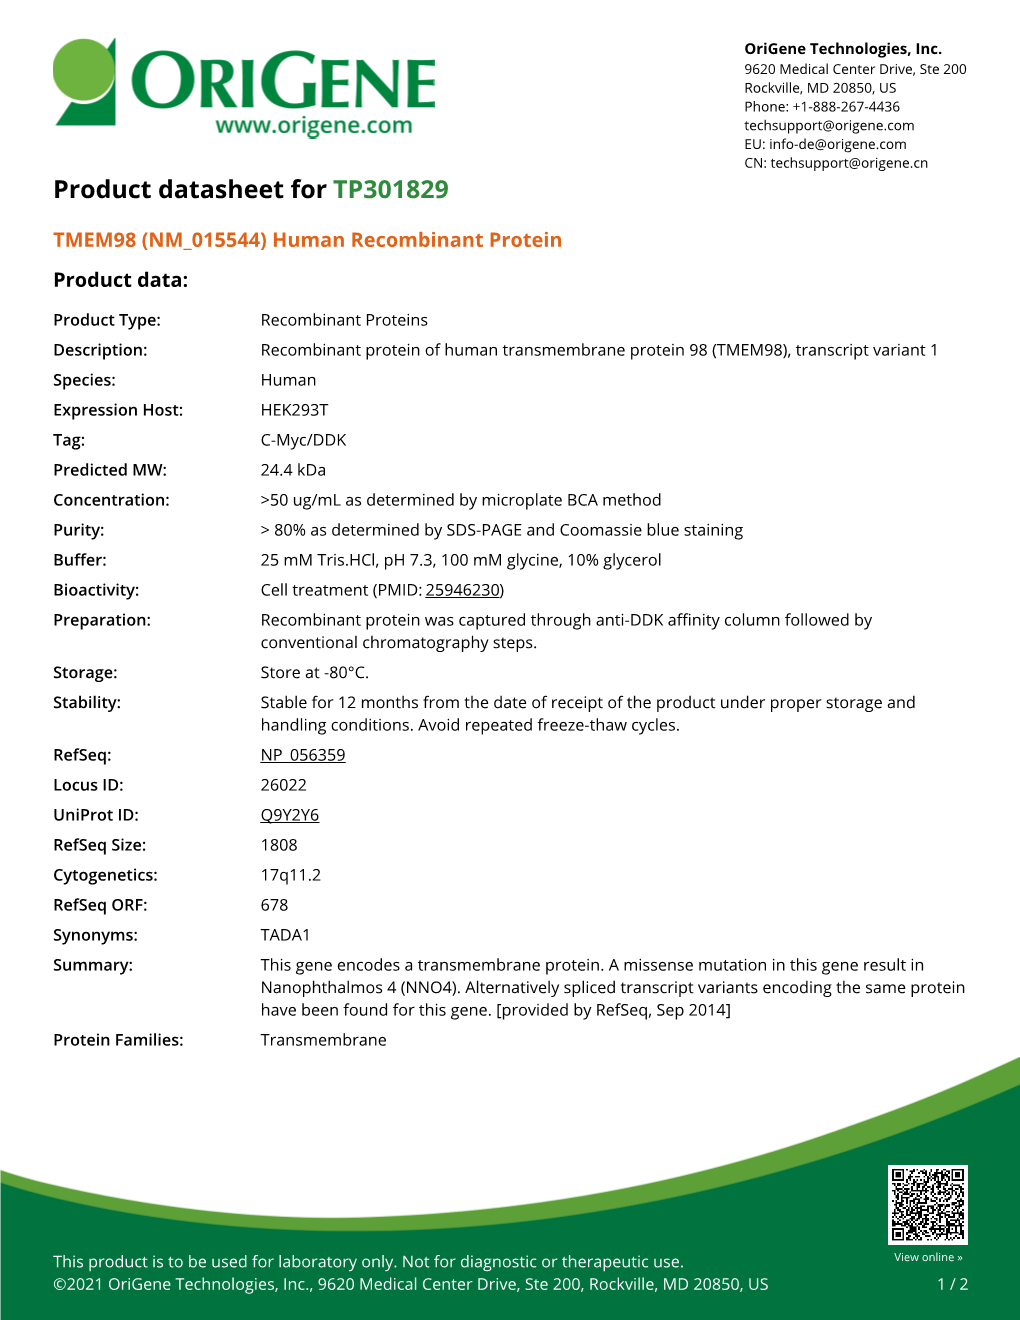 TMEM98 (NM 015544) Human Recombinant Protein – TP301829